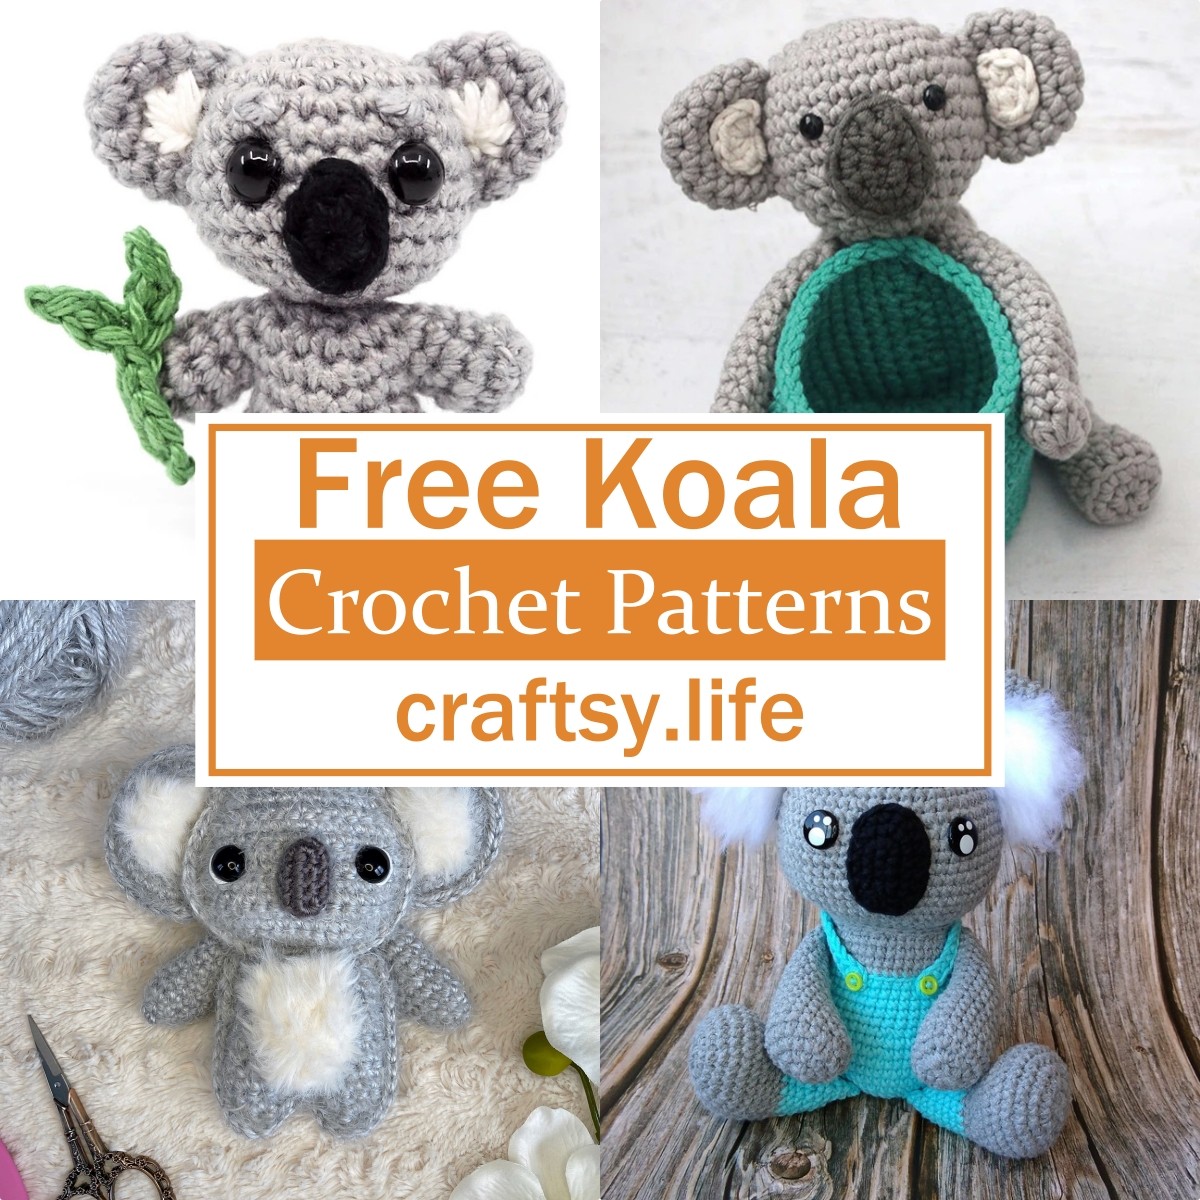 5 Free Koala Crochet Patterns